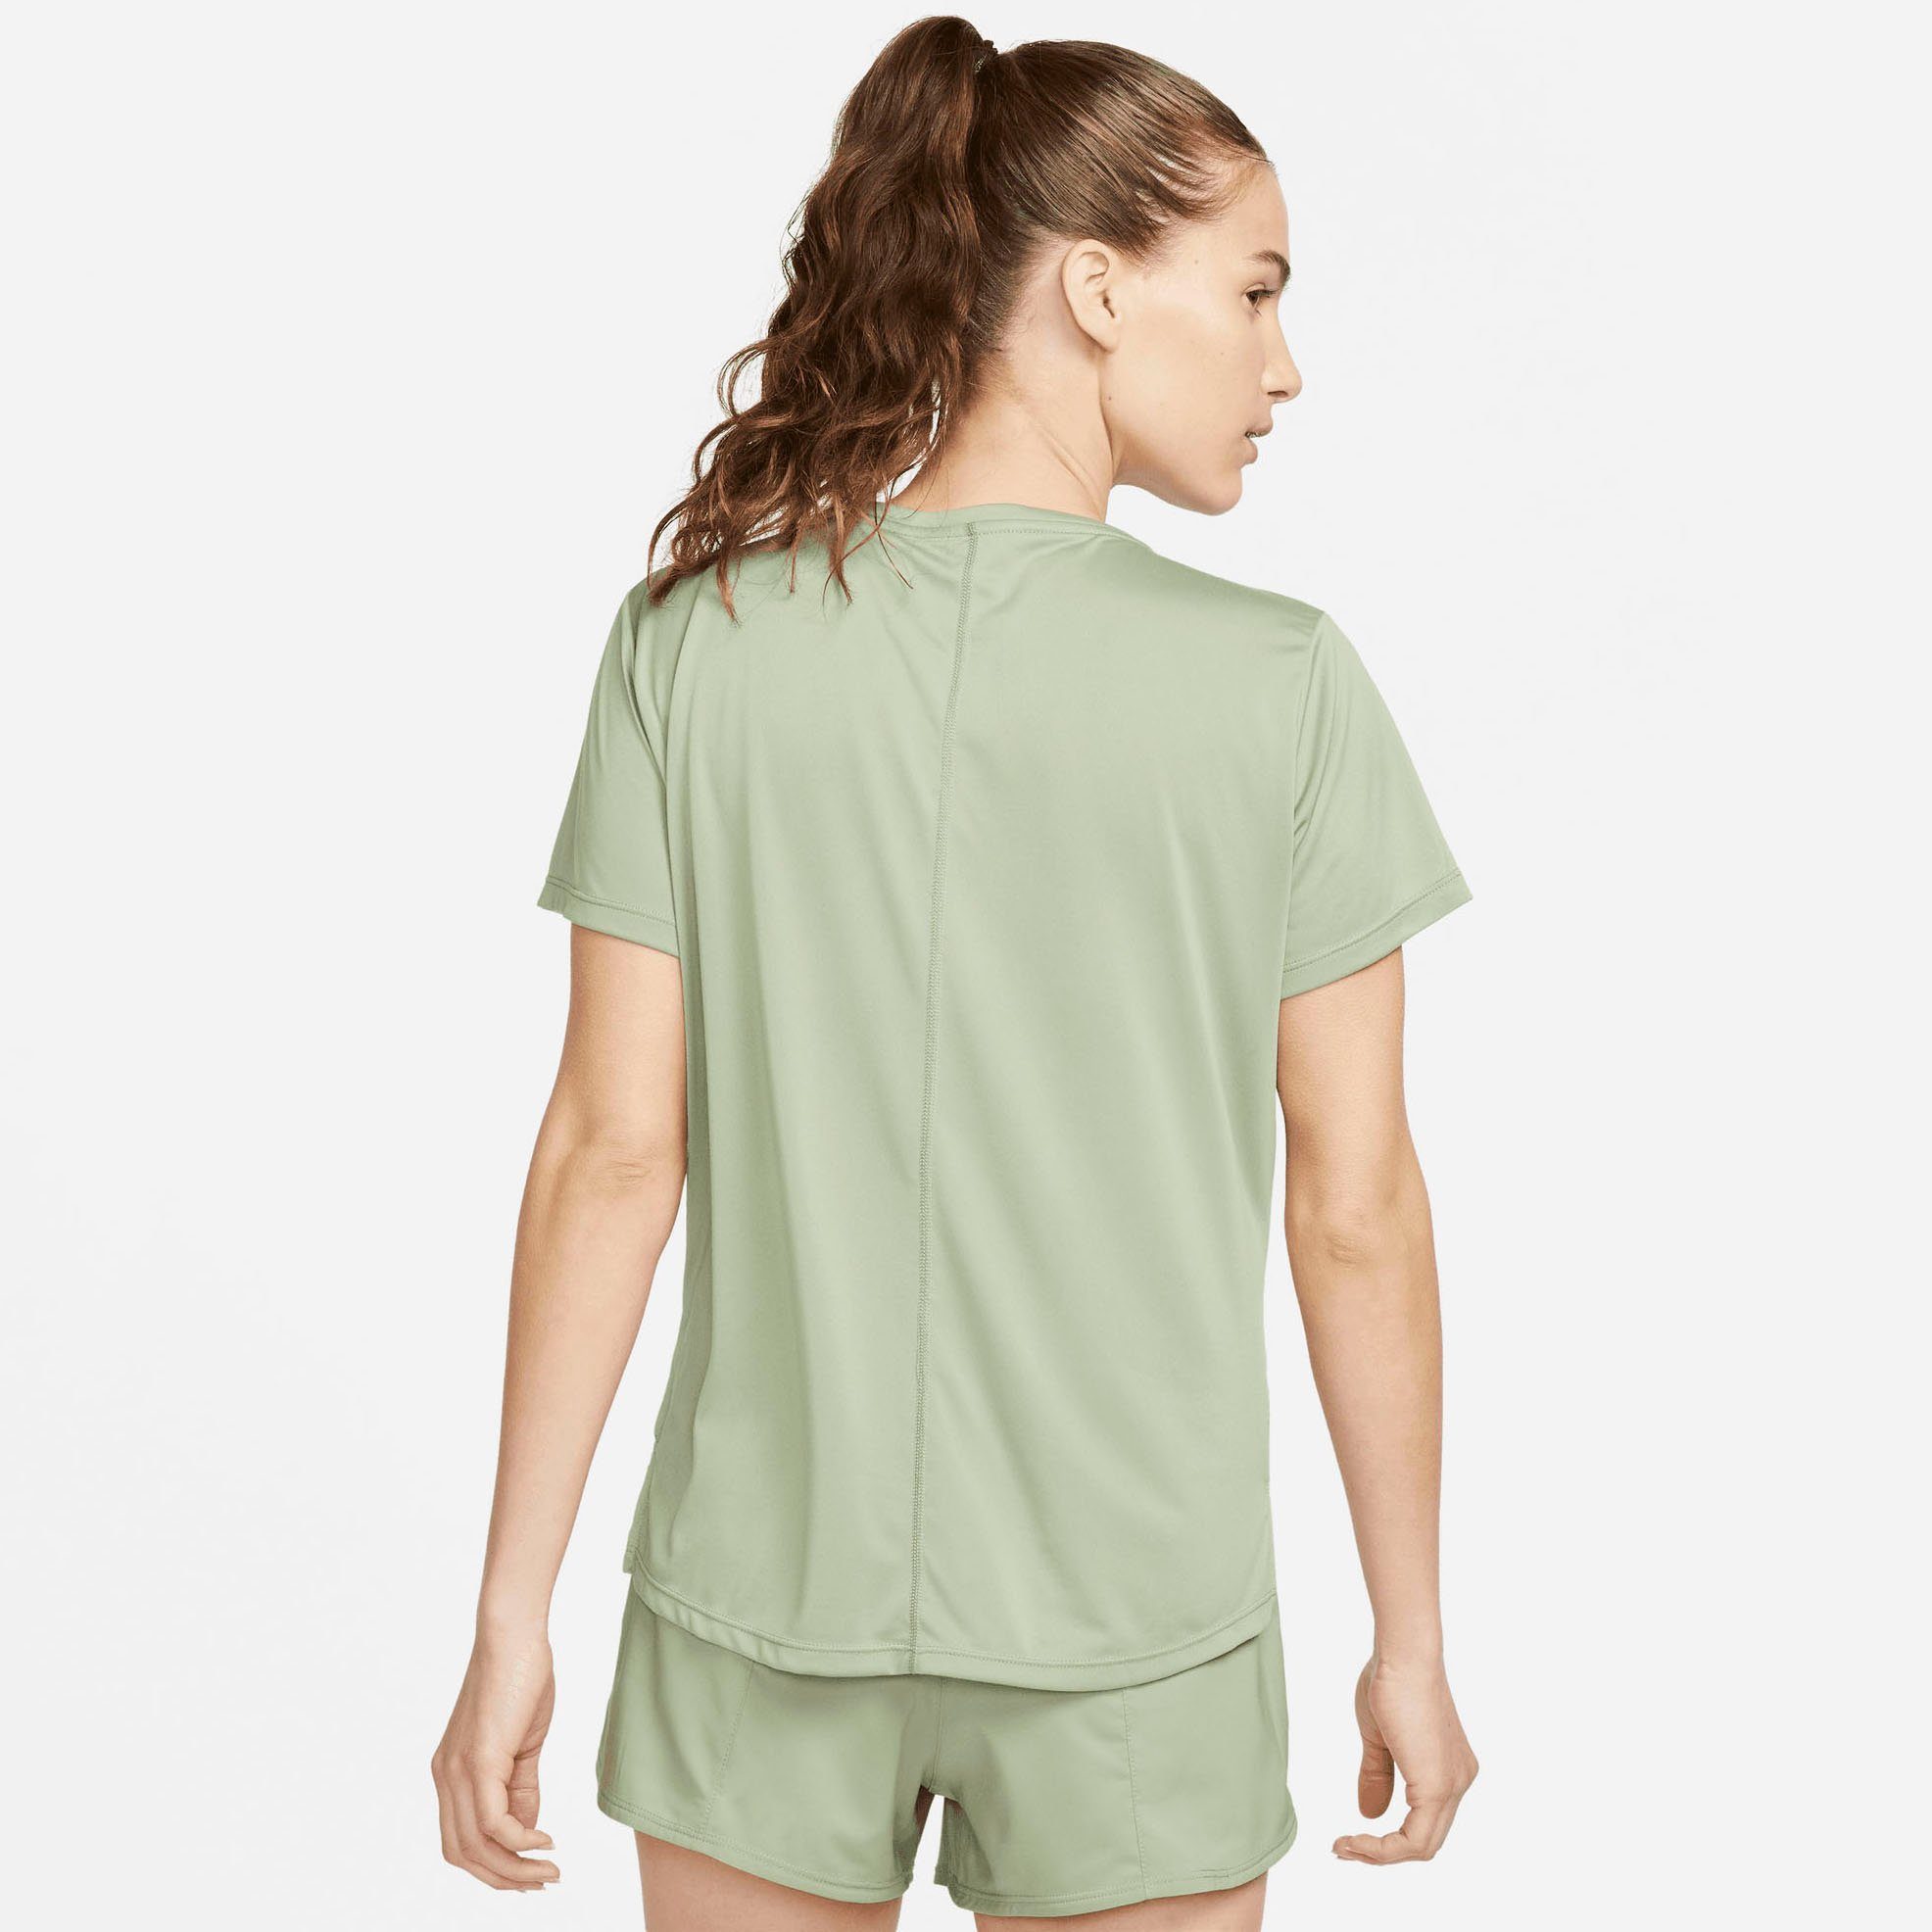 Nike Laufshirt One grün Swoosh Women's Top Short-Sleeved Dri-FIT